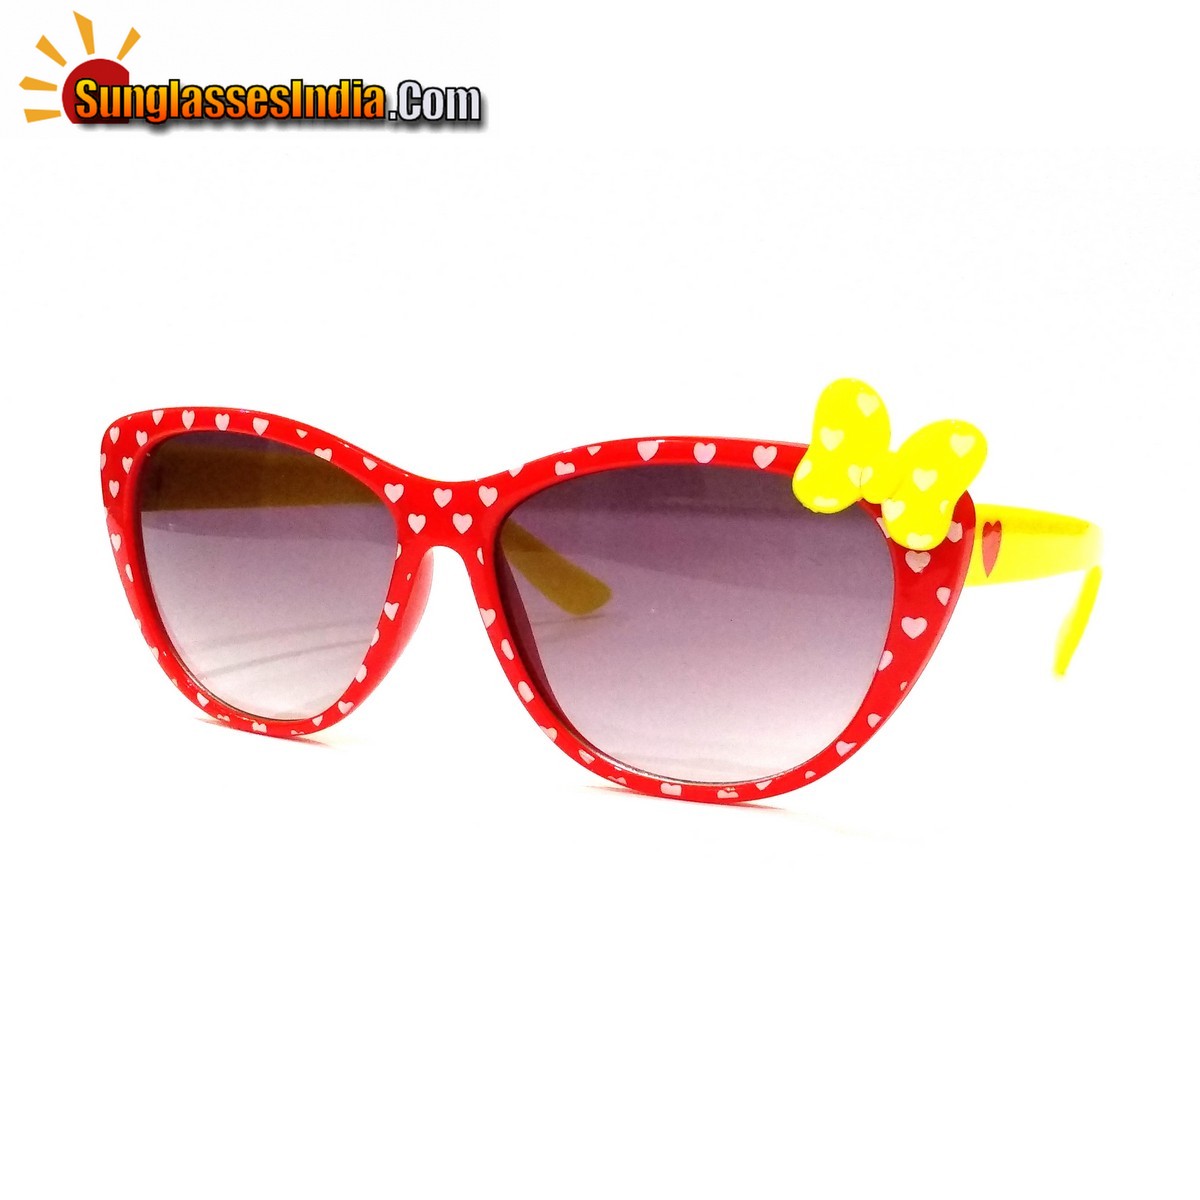 Kids Fashion Sunglasses TKS001Red